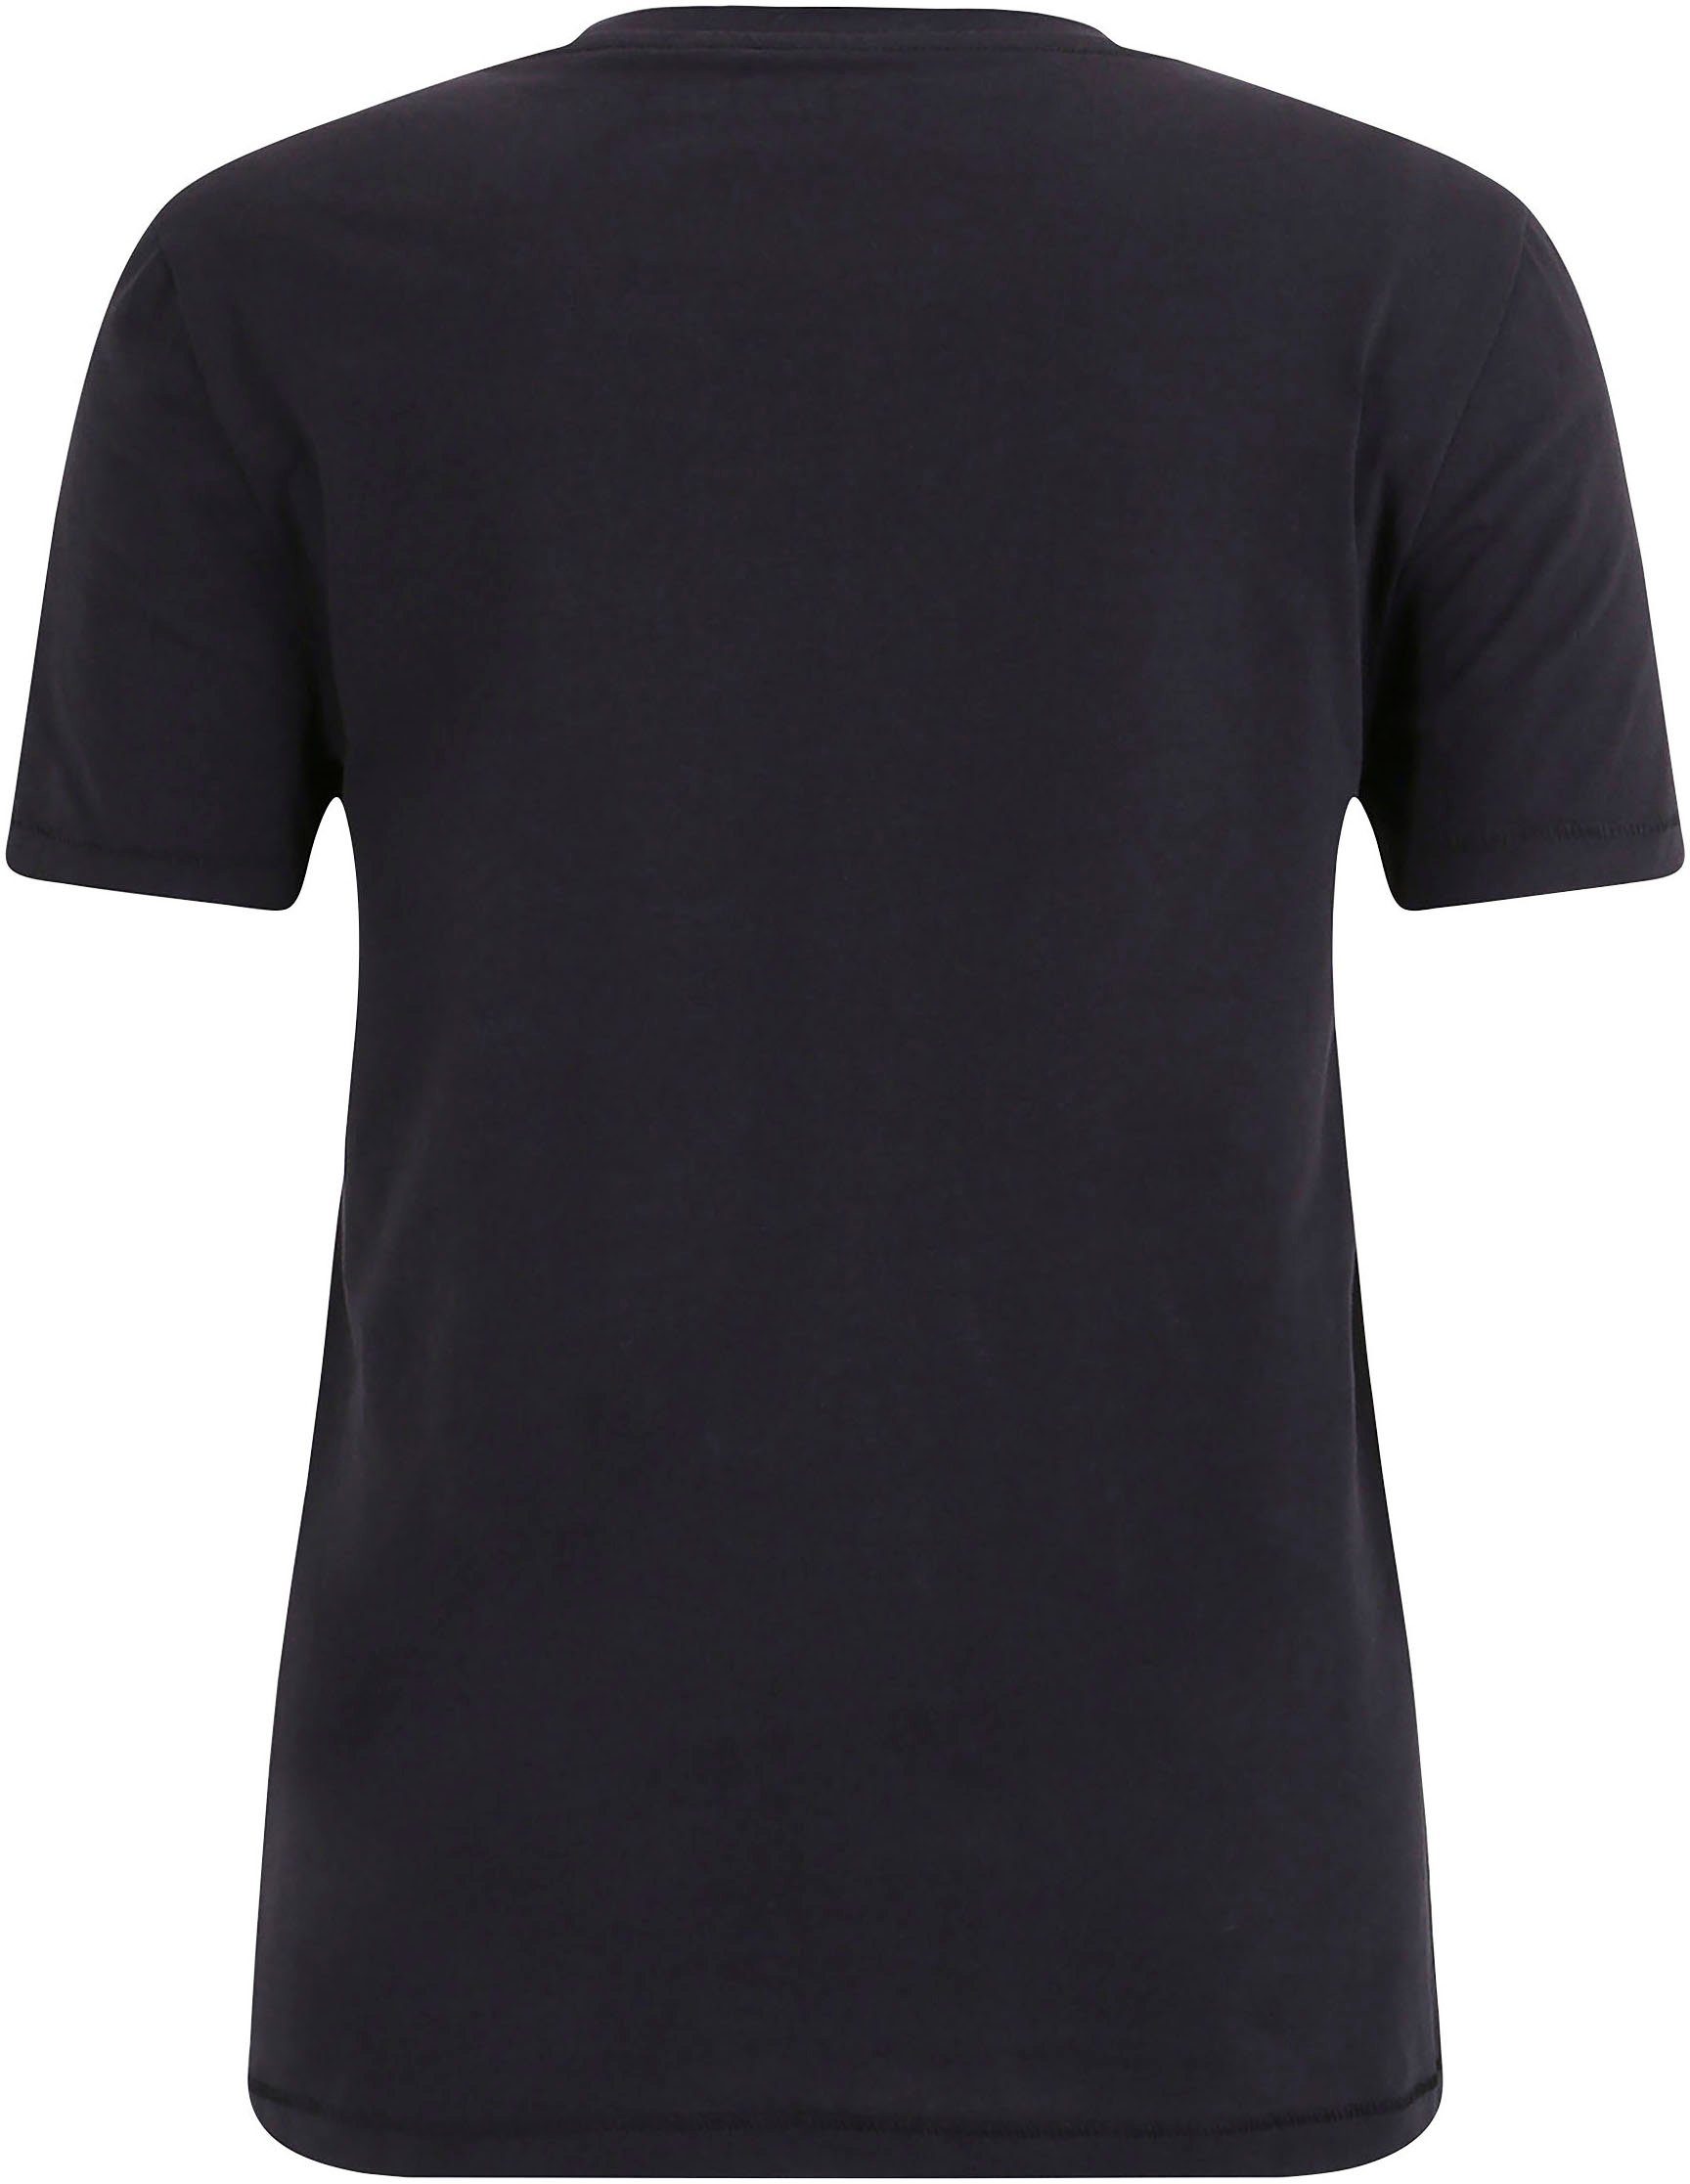 mit - Rundhalsausschnitt NEUE KOLLEKTION black T-Shirt Tamaris beauty